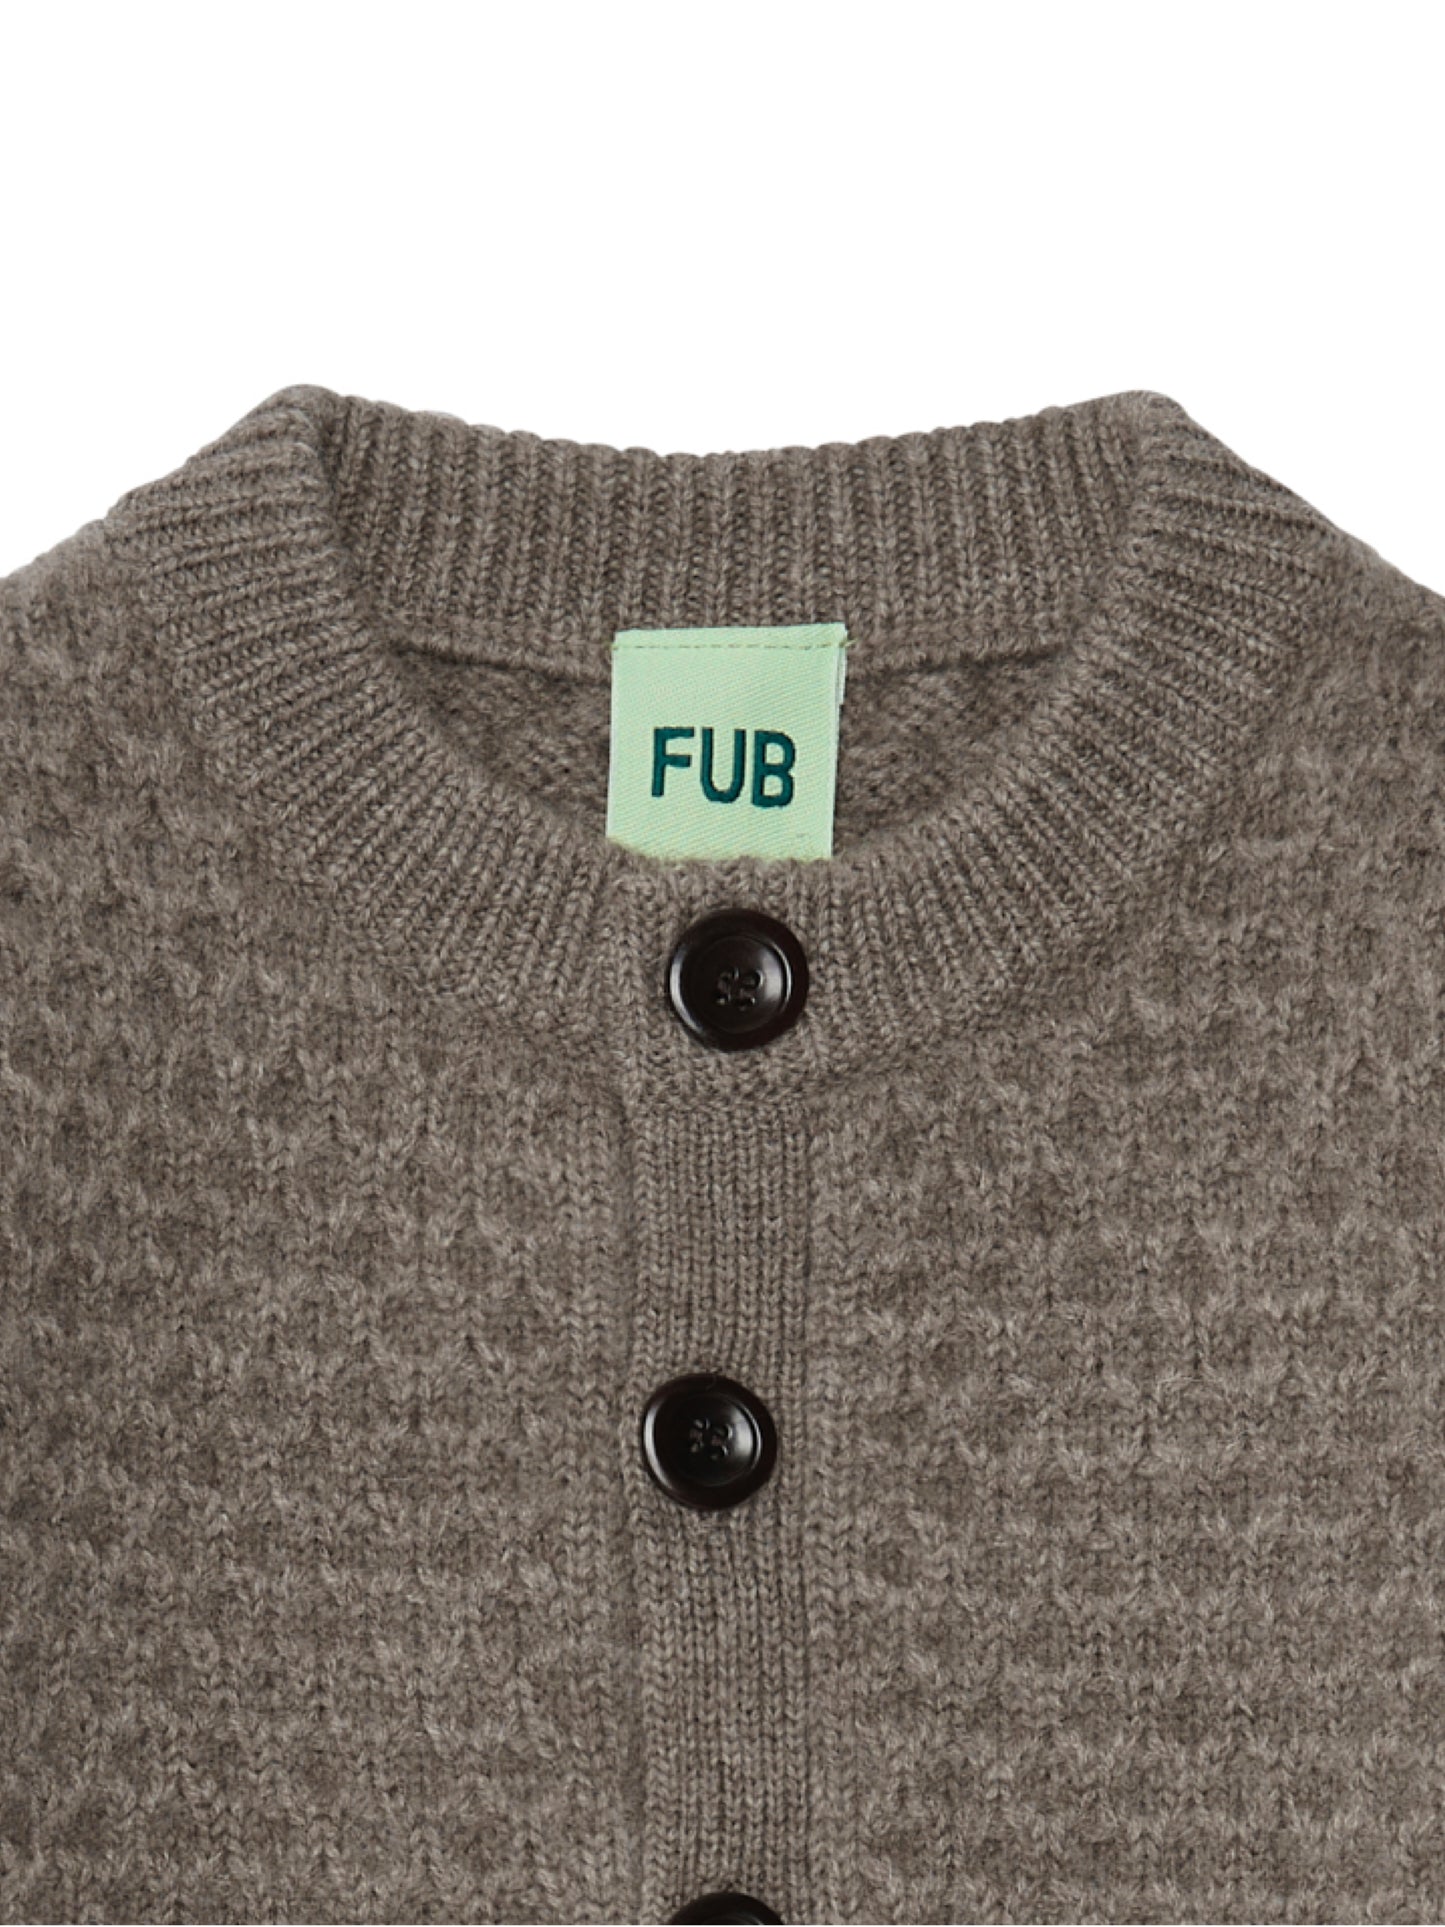 FUB - Baby structure cardigan - Brown melange